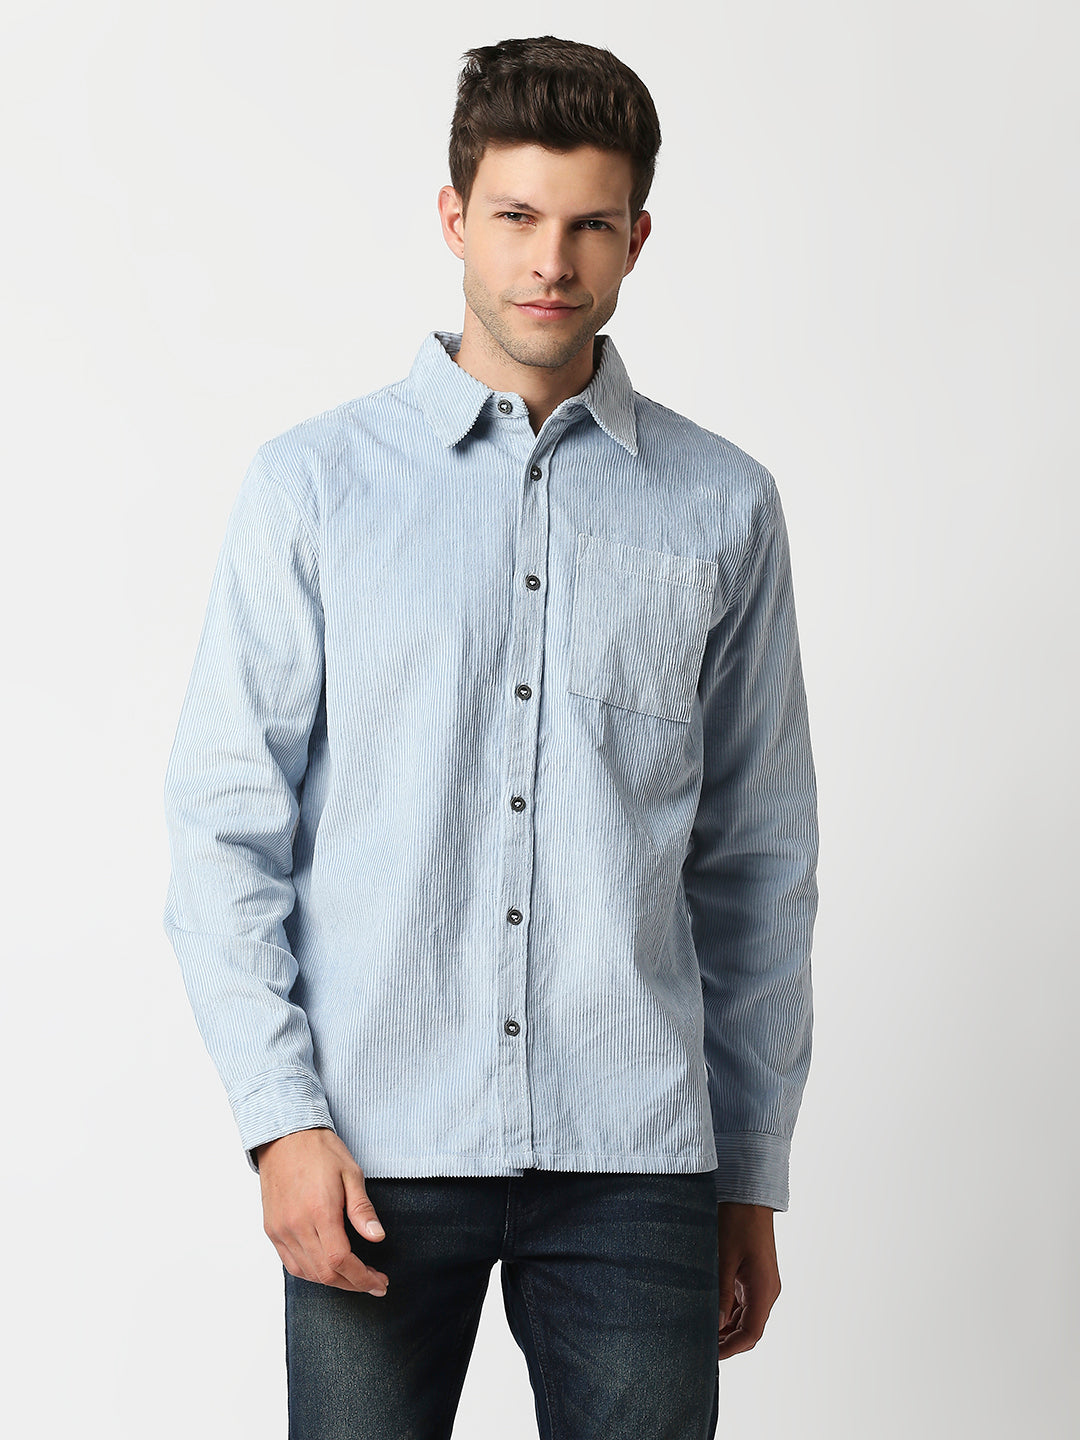 Buy Blamblack Men's Aqua Blue Color Full Sleeves Shirt